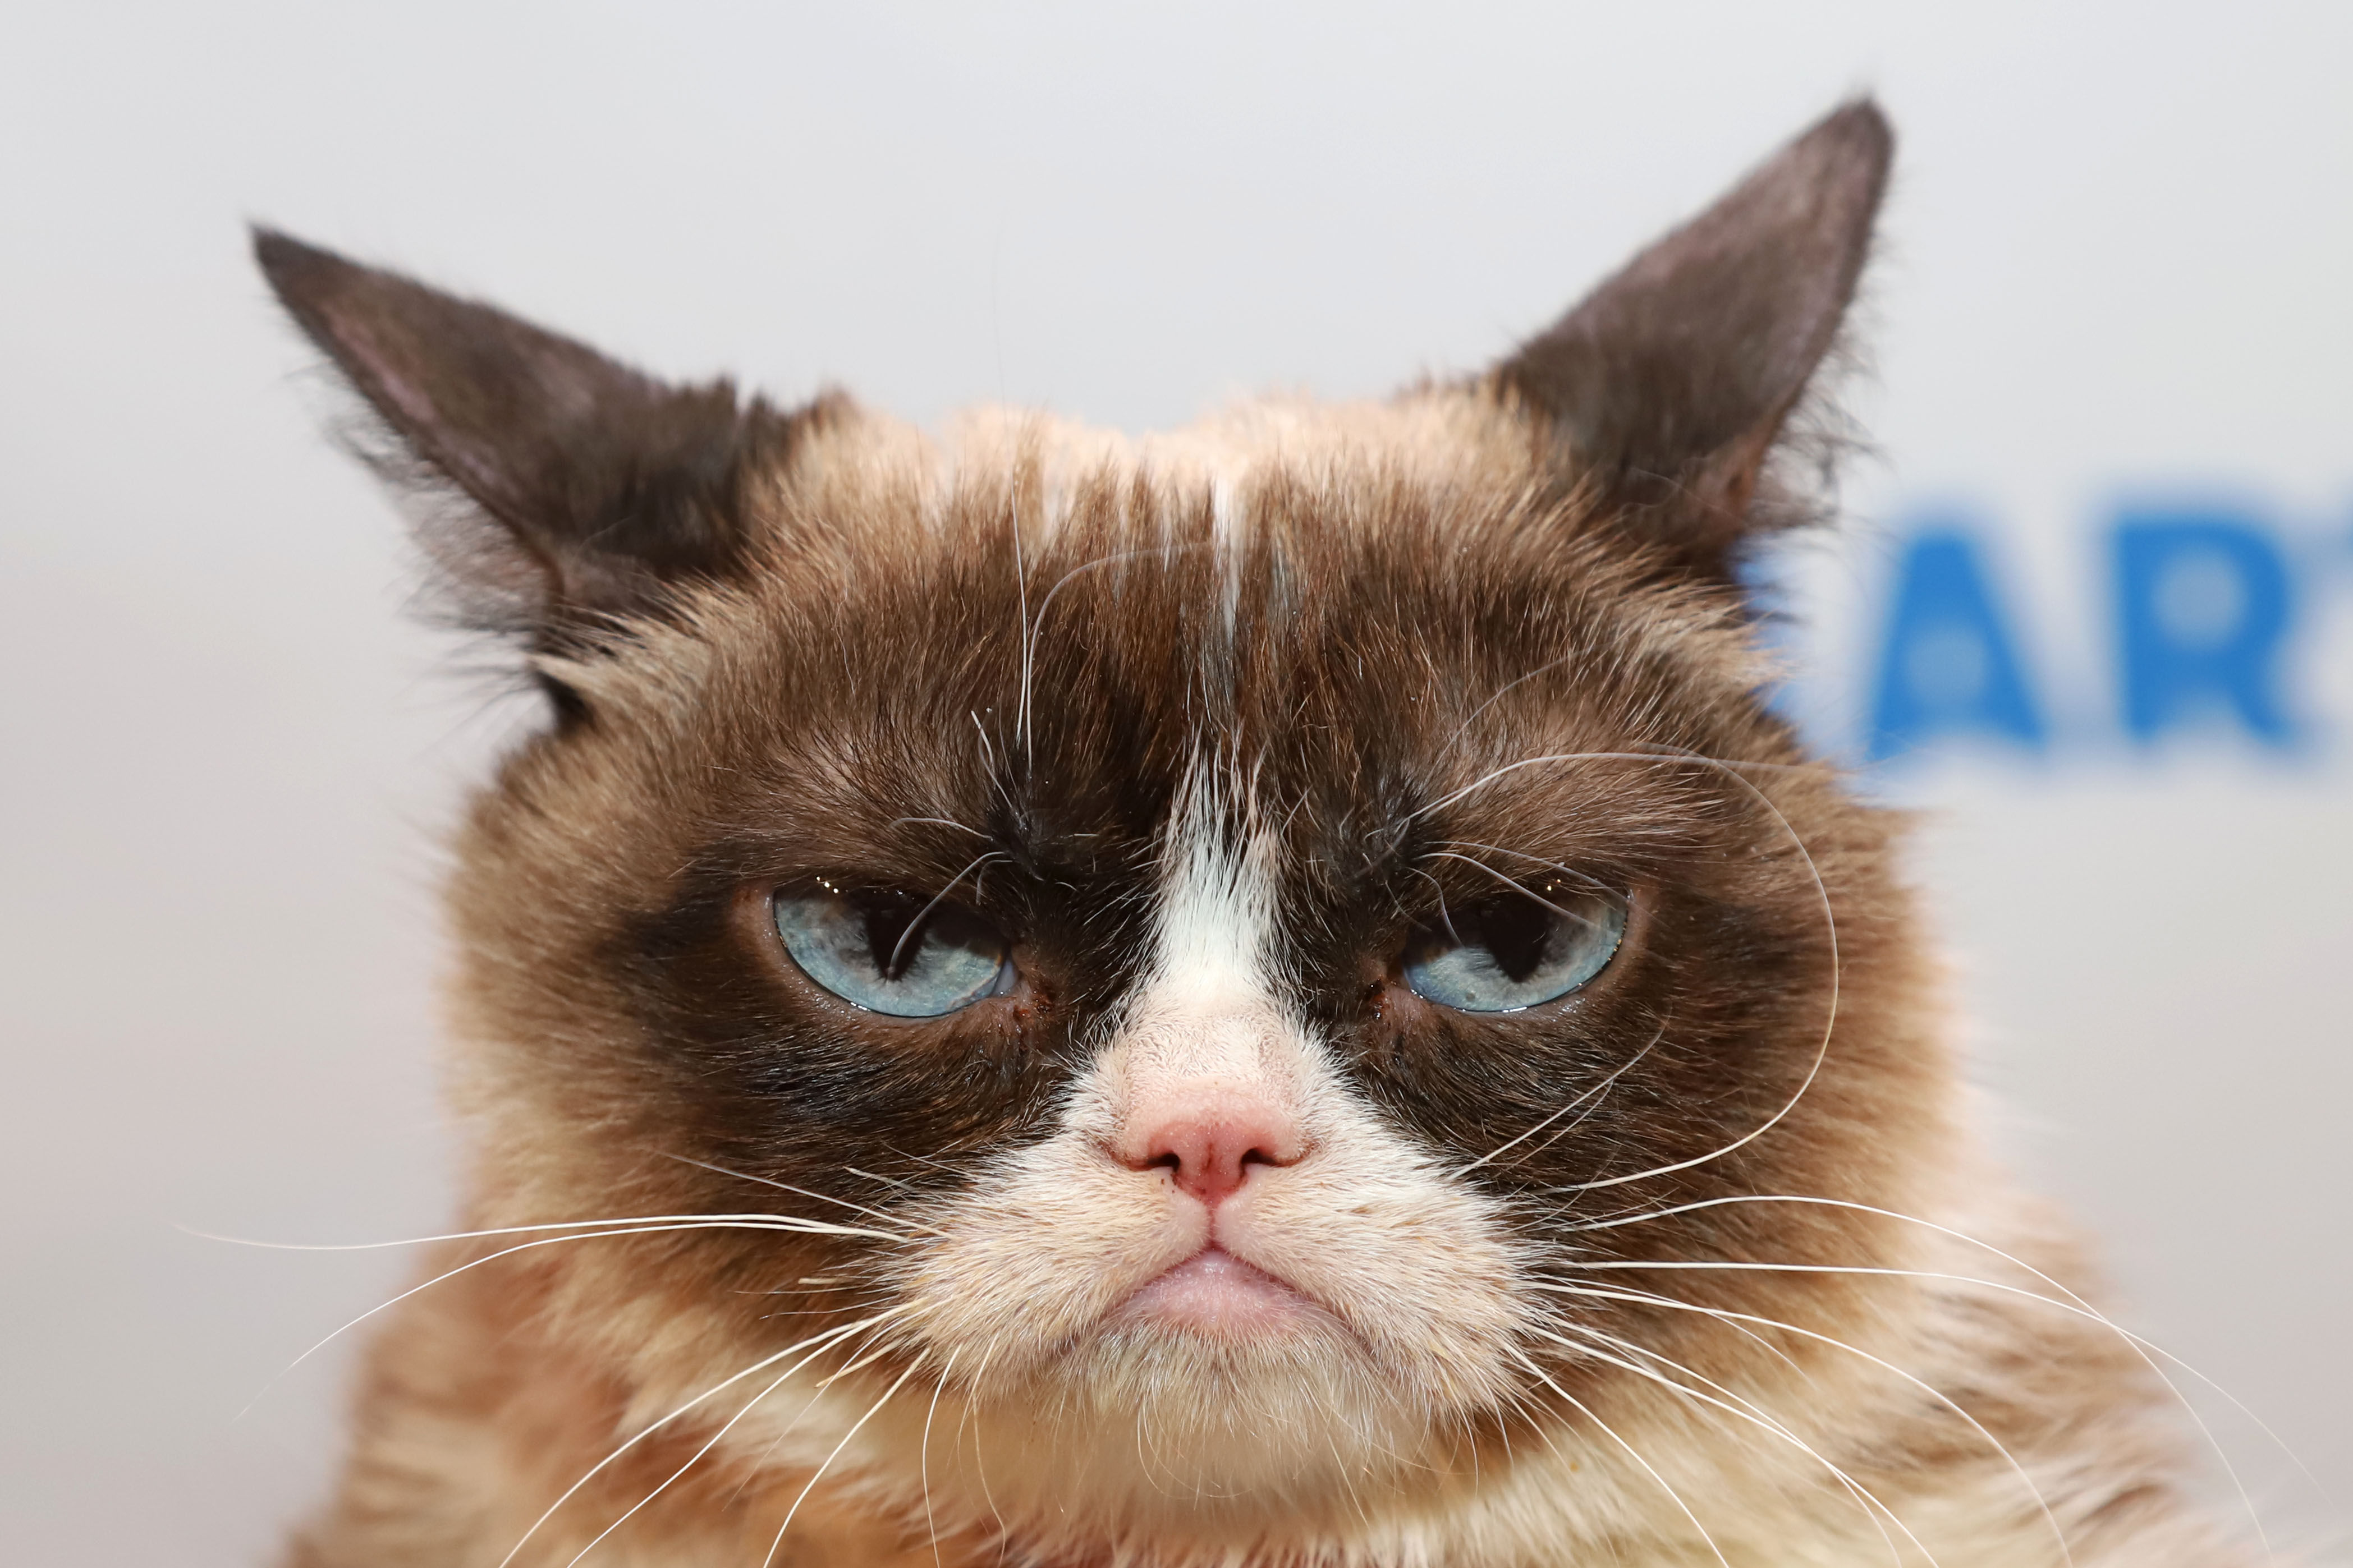 Grumpy Cat, the internet's most famous cat, dead at 7